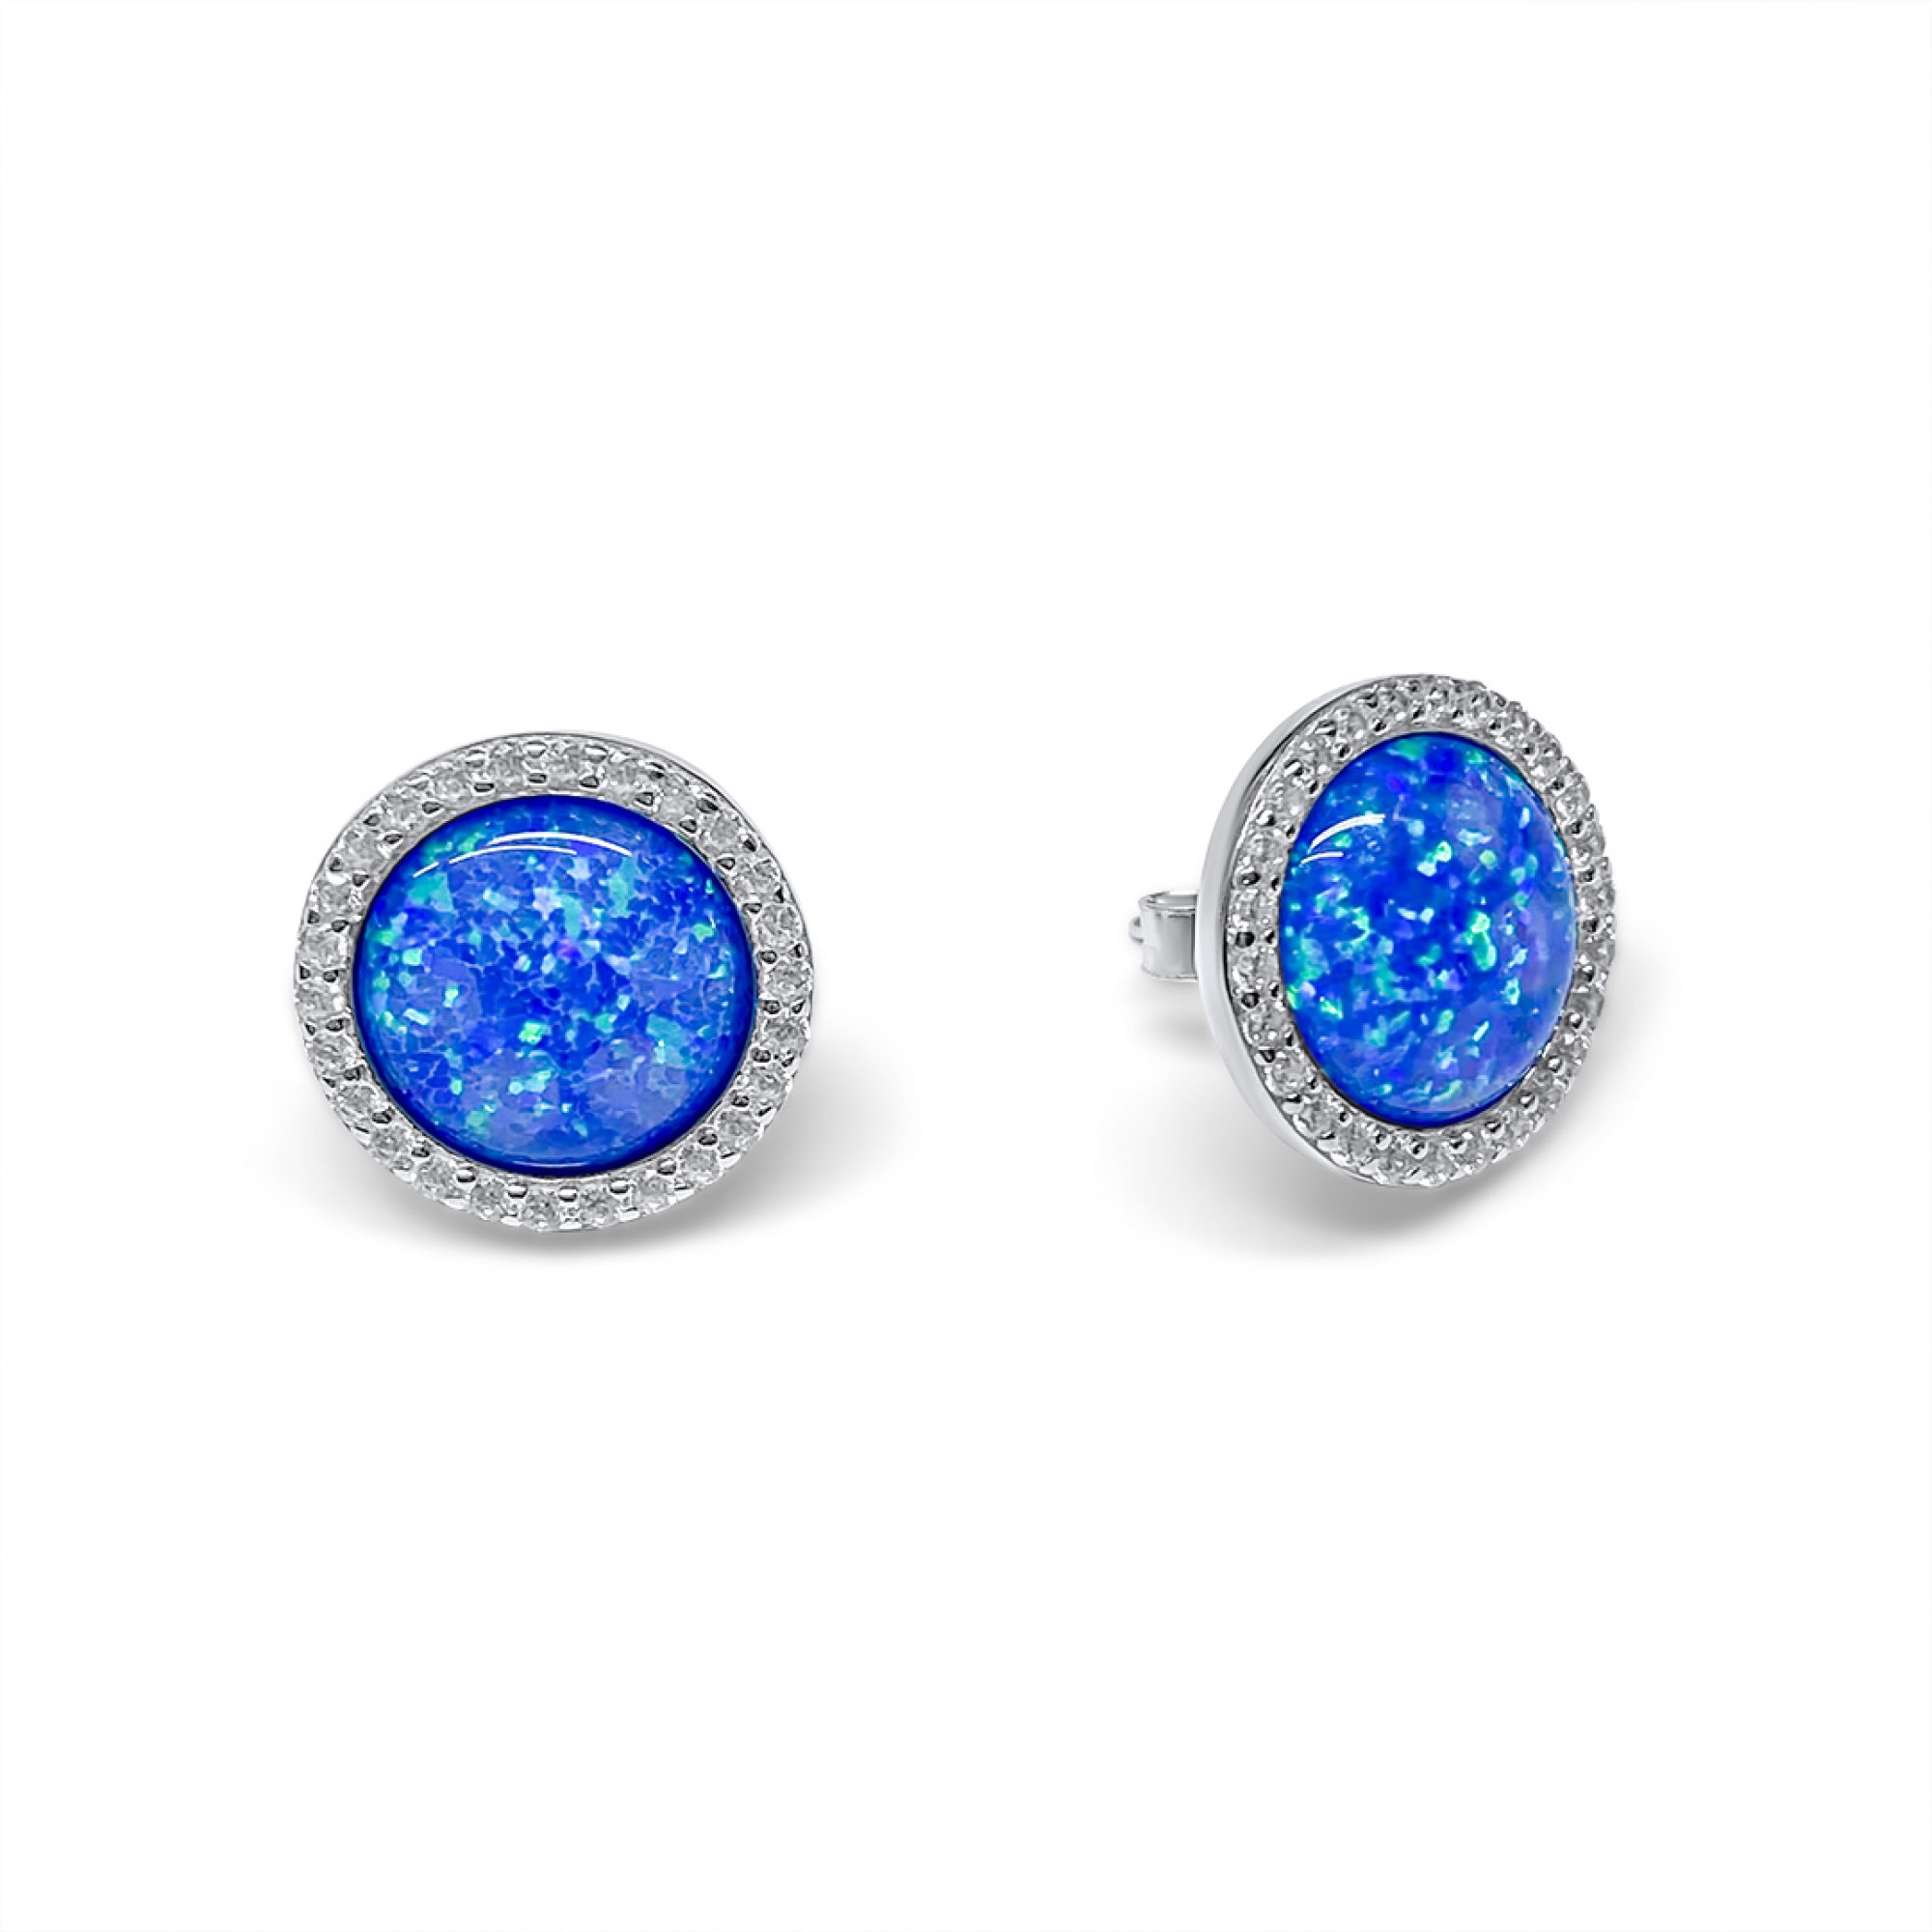 Stud opal earrings with zircon stones